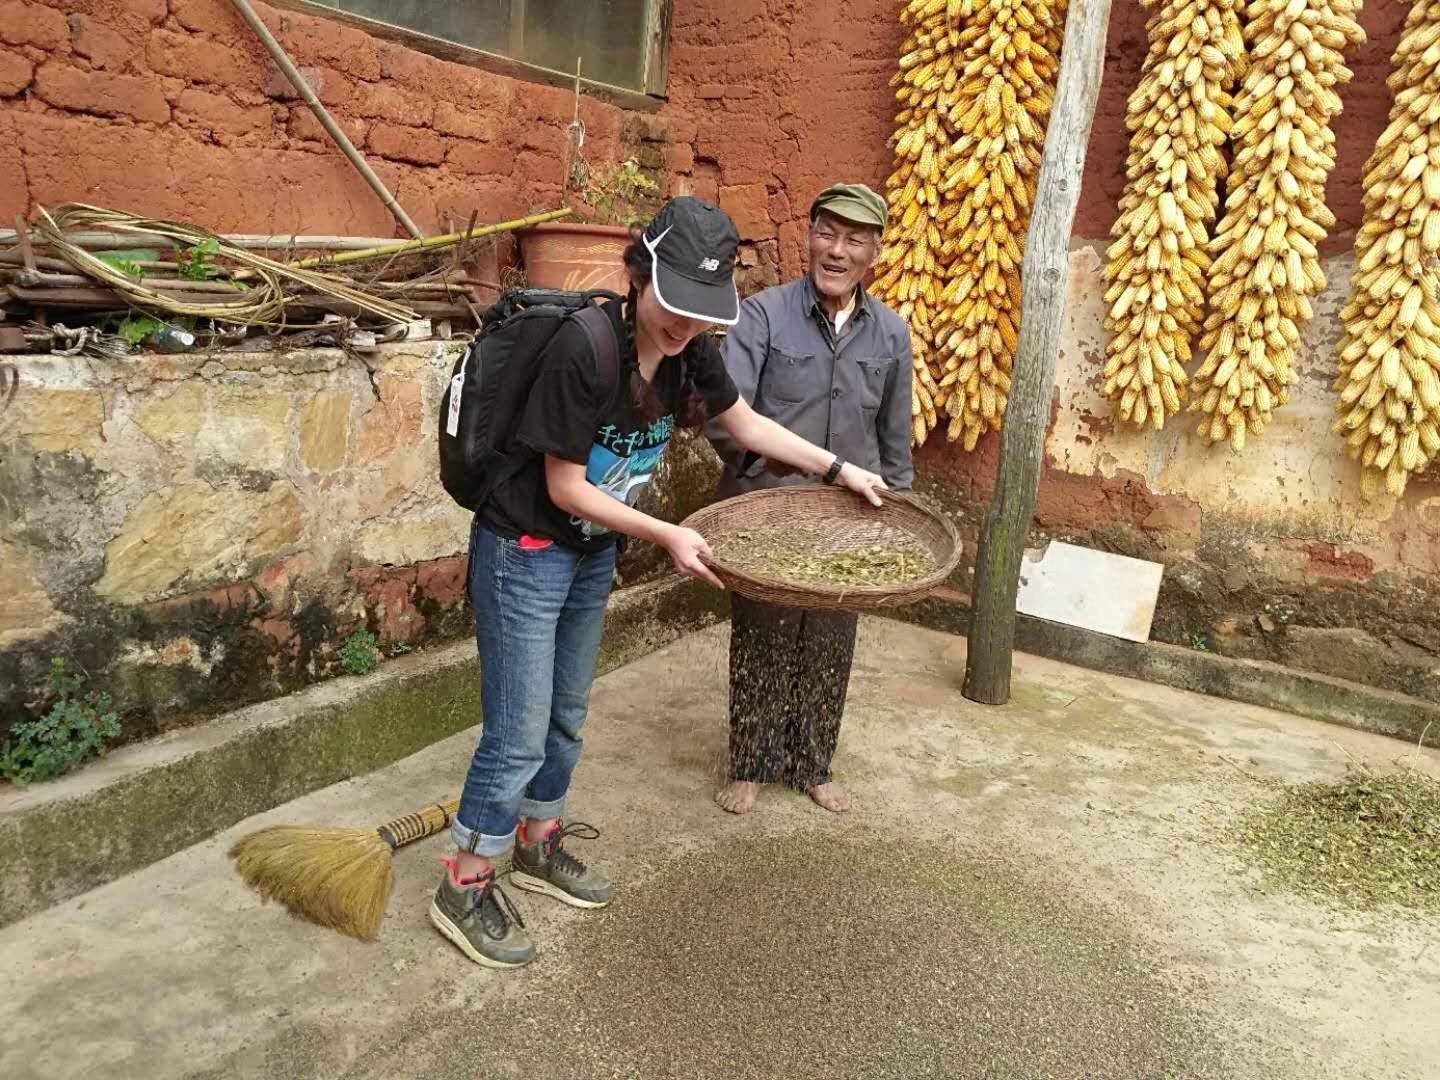 Kisara Moore sifting buckwheat in Kunming, China next to an elderly Chinese man